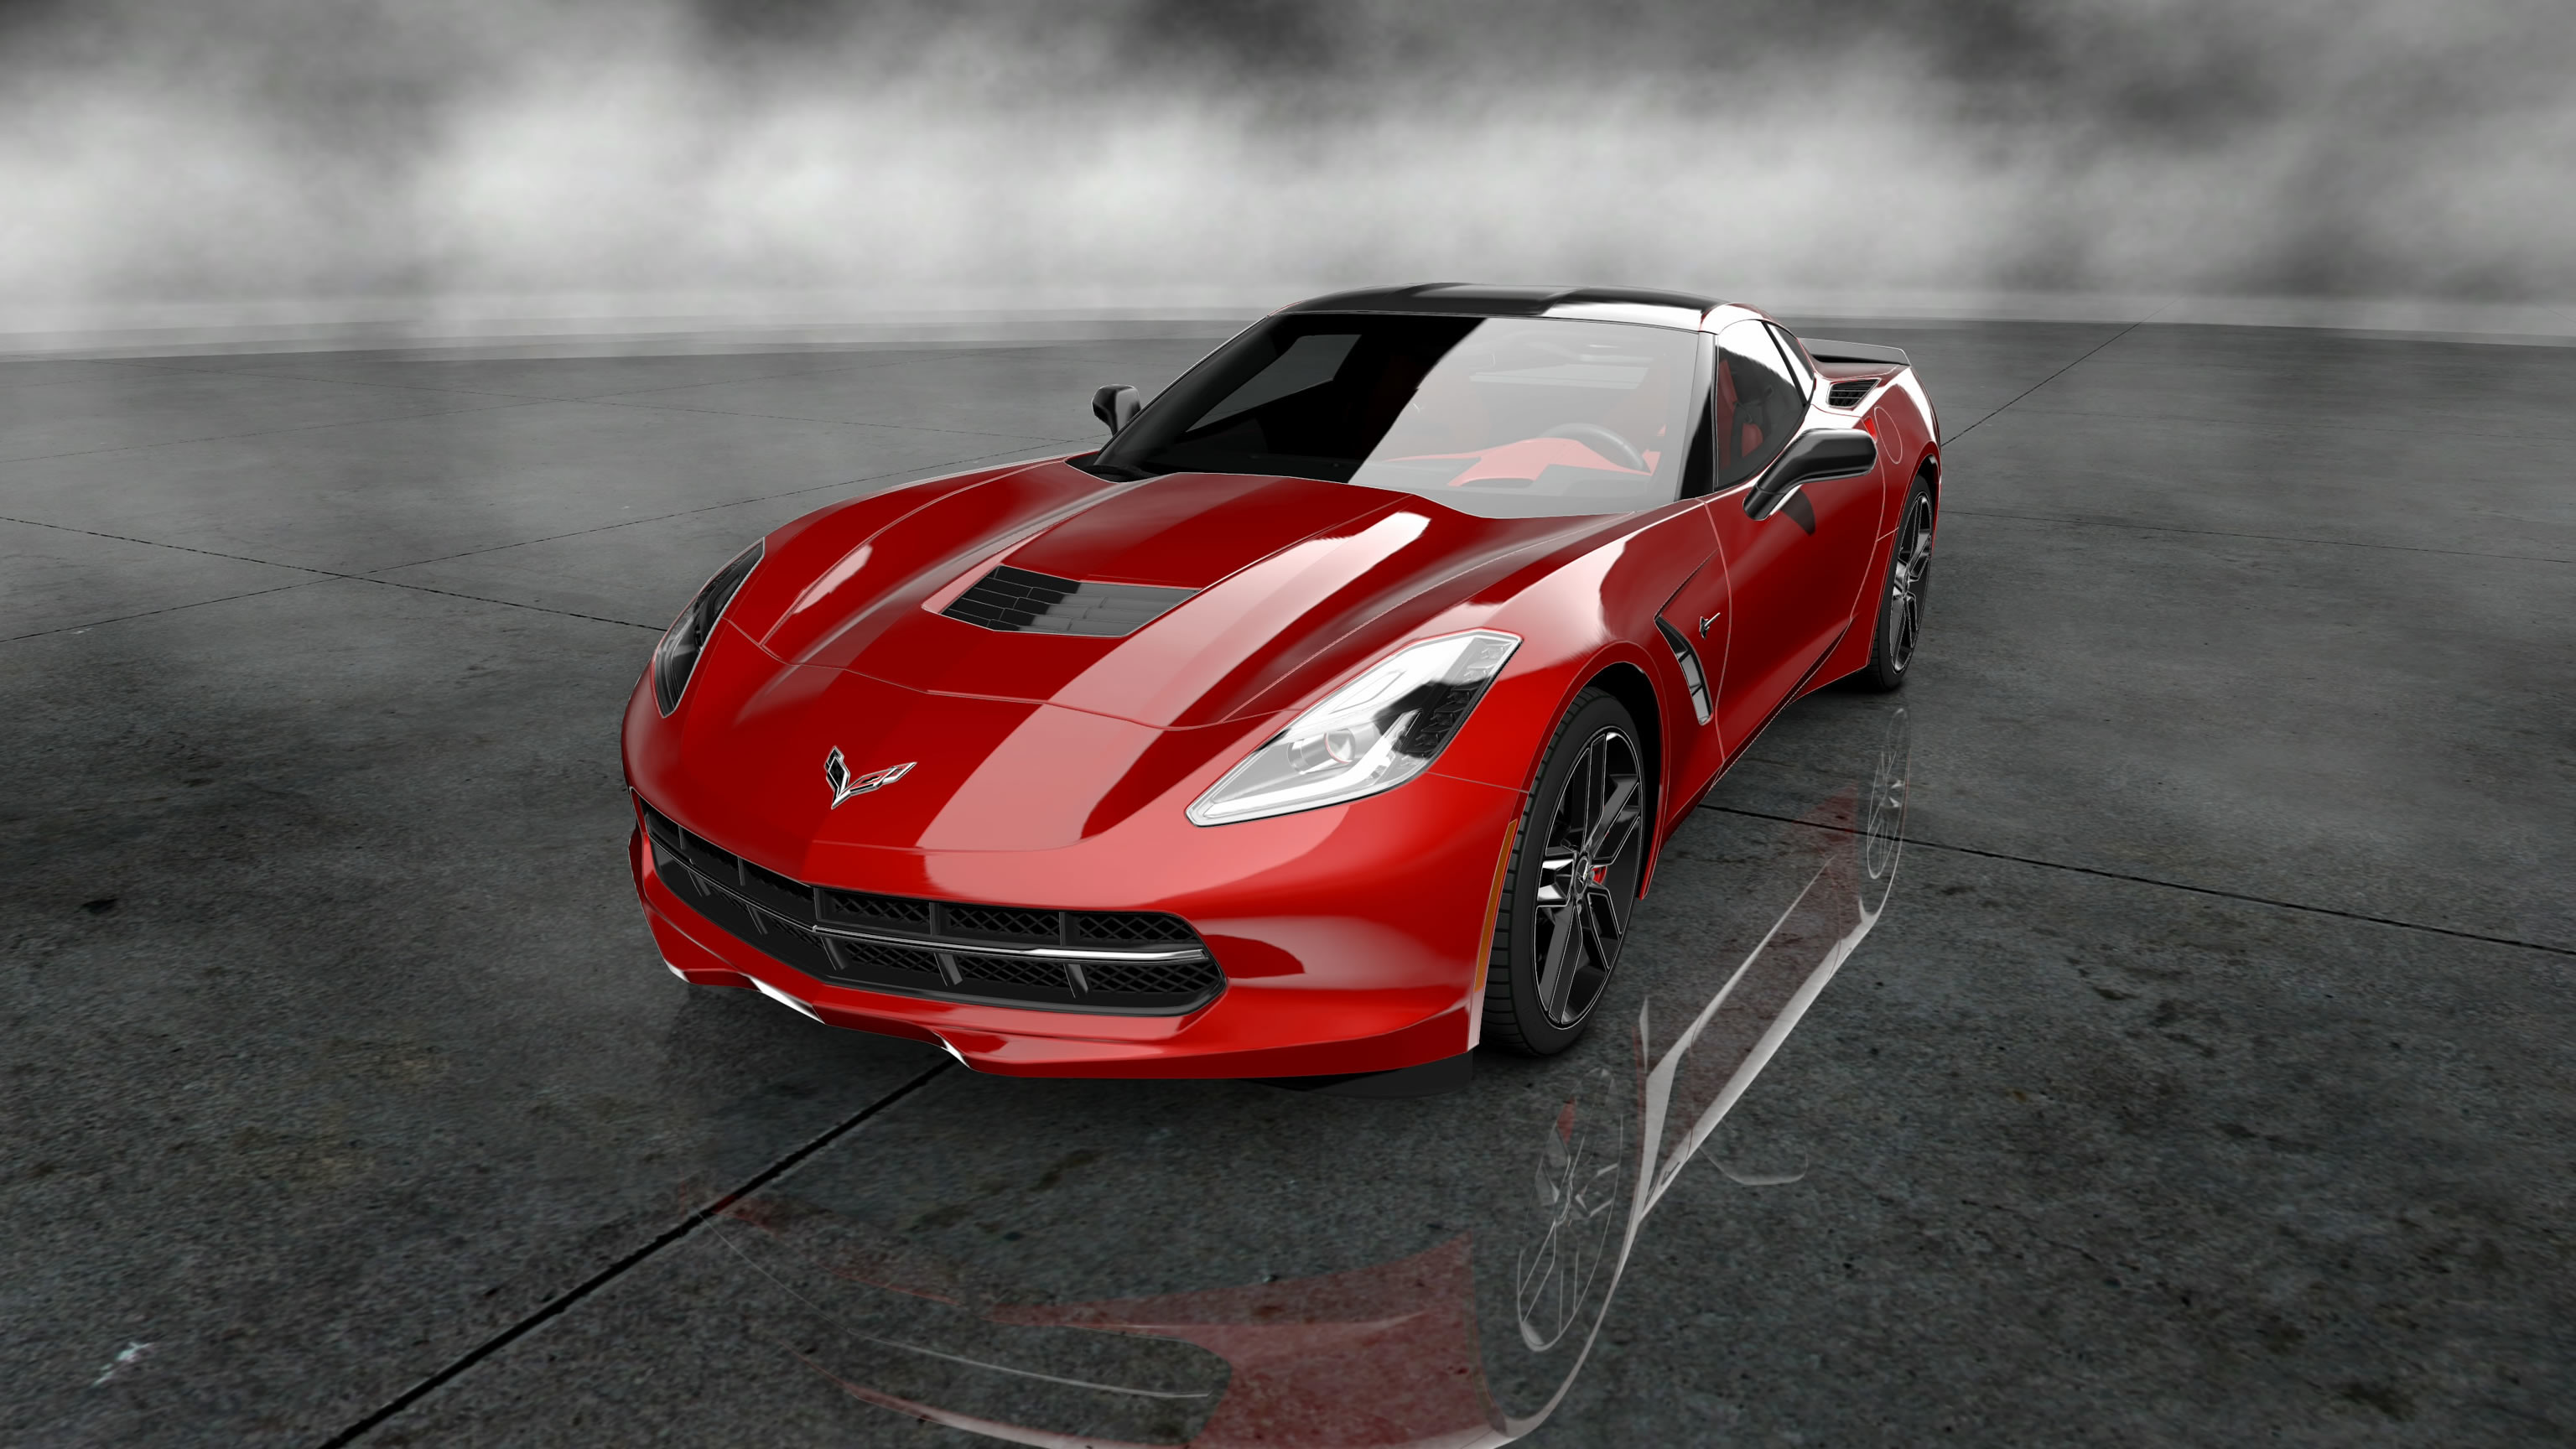 3072x1728 Full HD 1080p Corvette Wallpapers HD, Desktop Backgrounds ... Corvette  Stingray Wallpaper ...